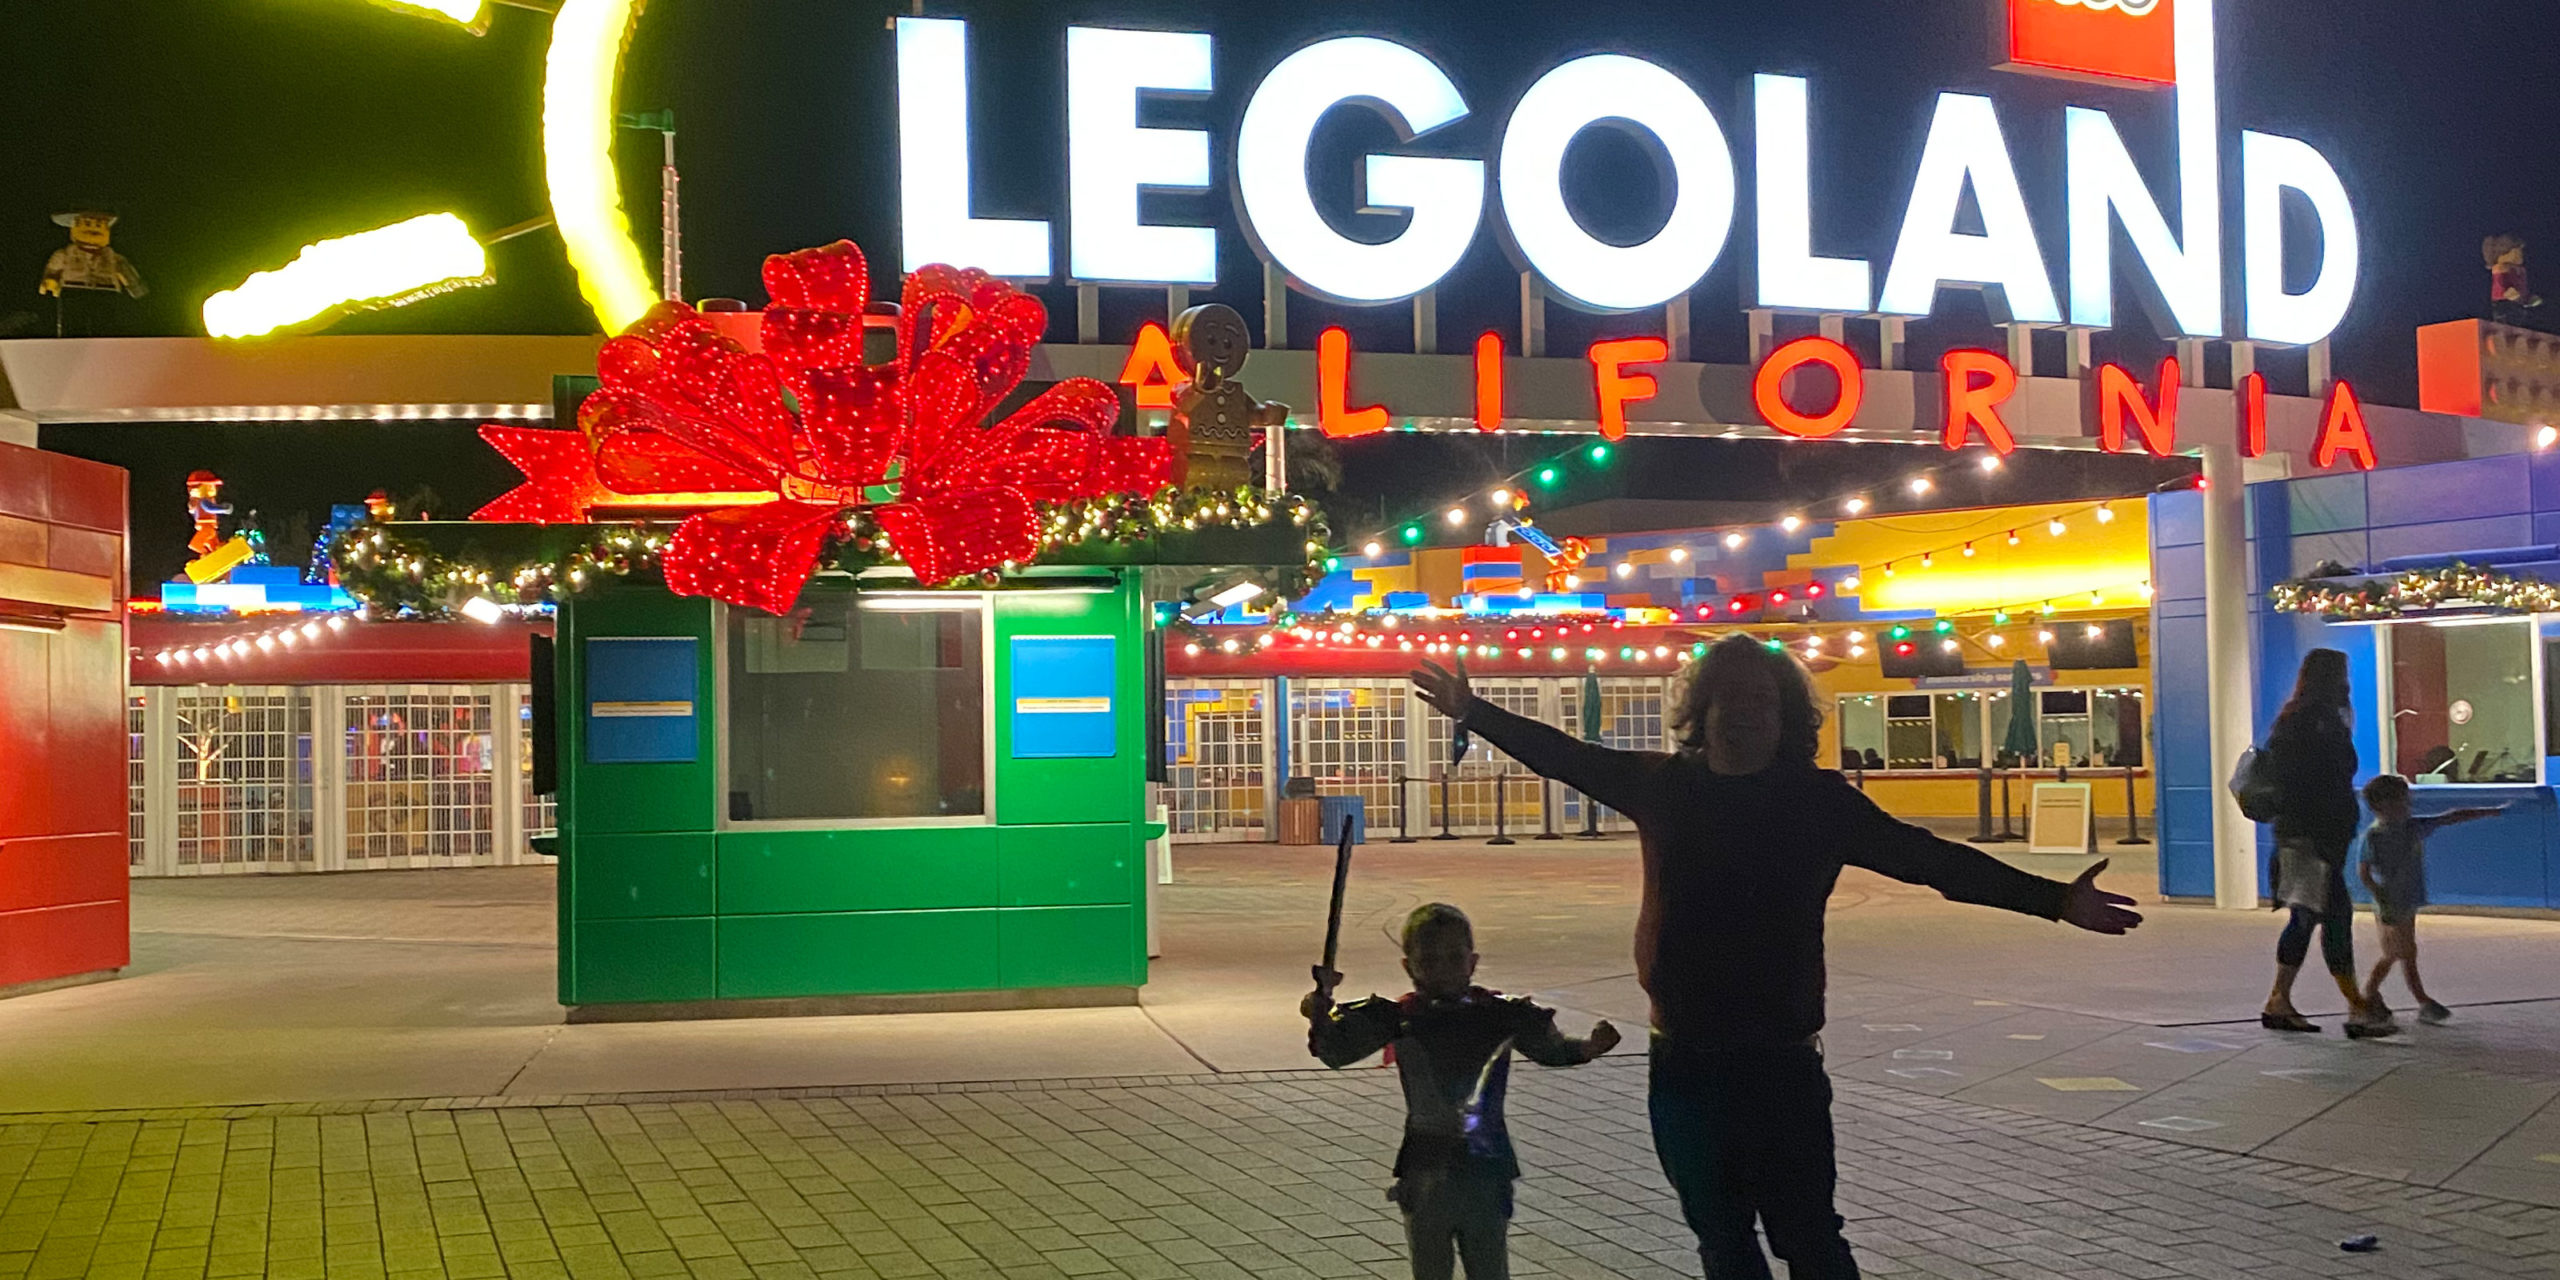 Legoland for the holidays